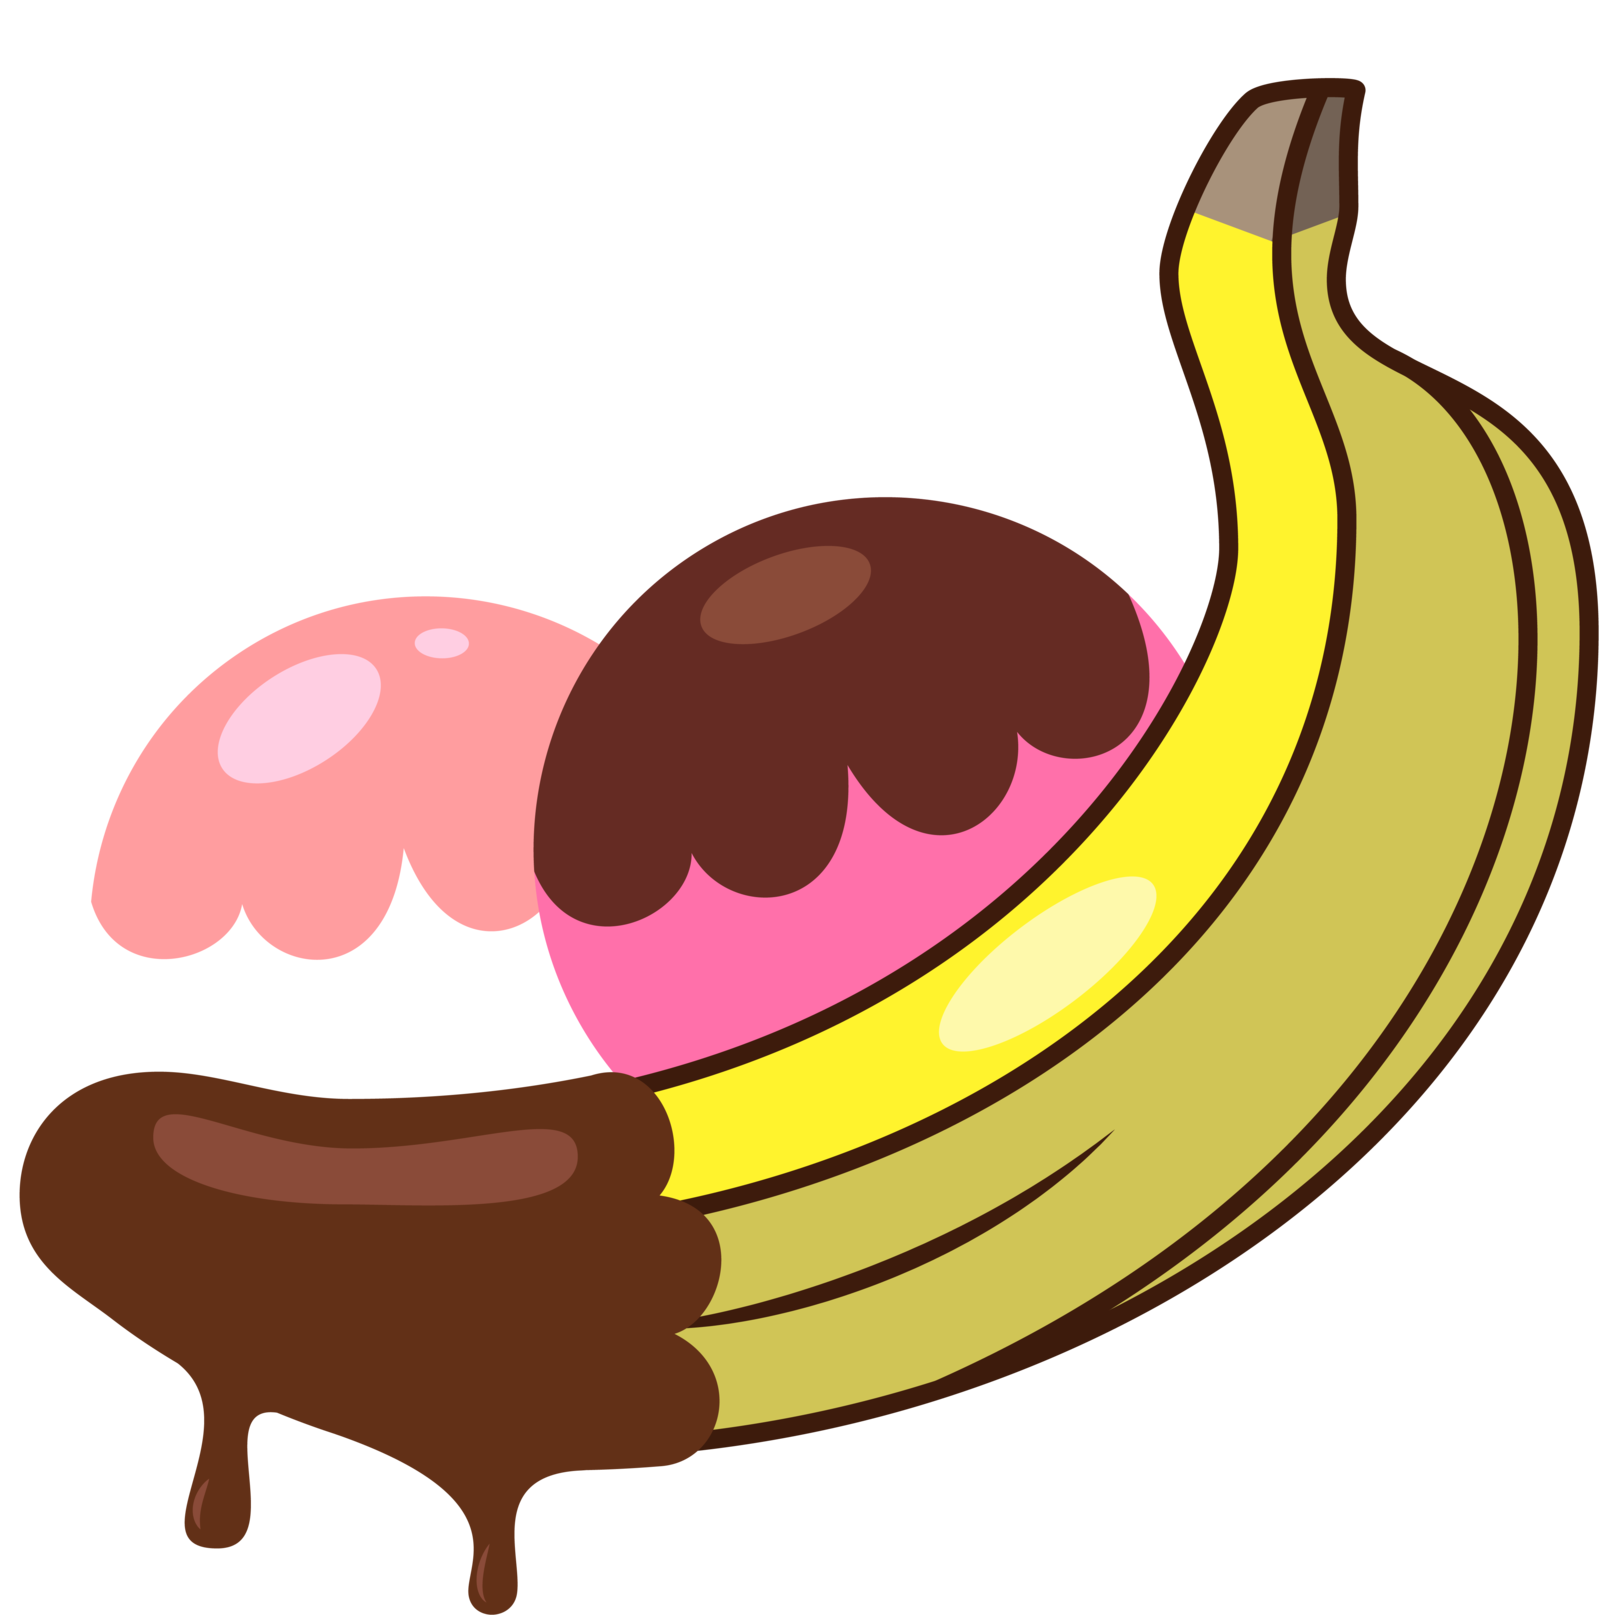 Split s cutie mark. Clipart banana vector